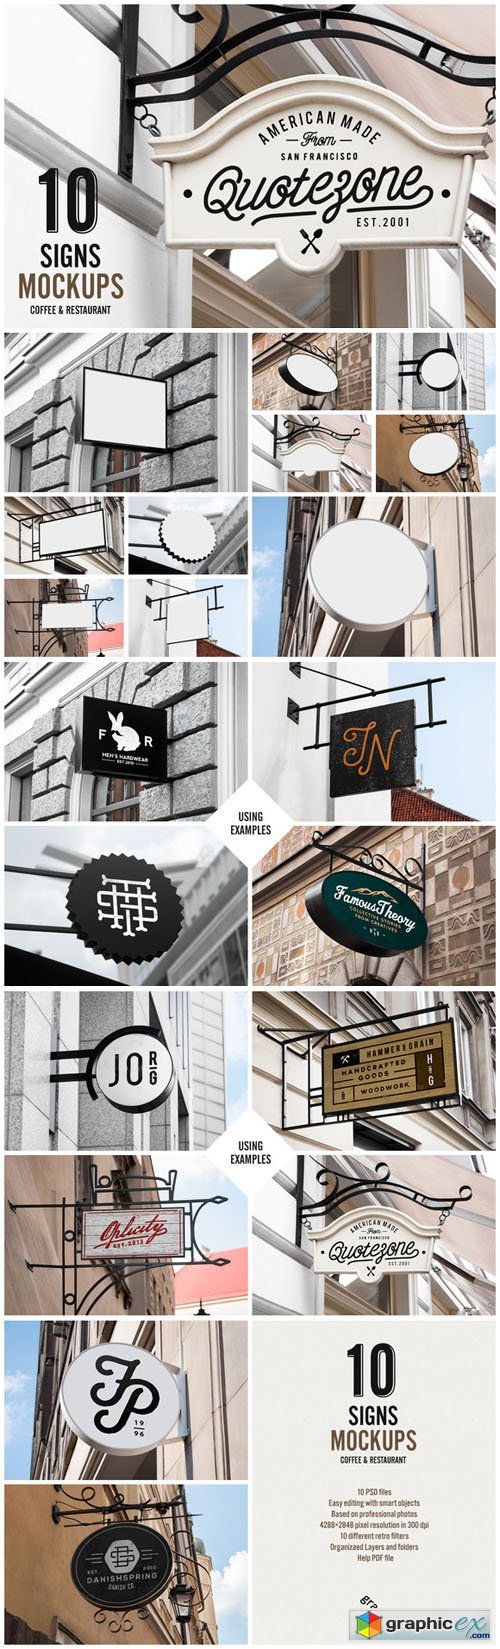 10 Signs Mockup Restaurant & Coffee